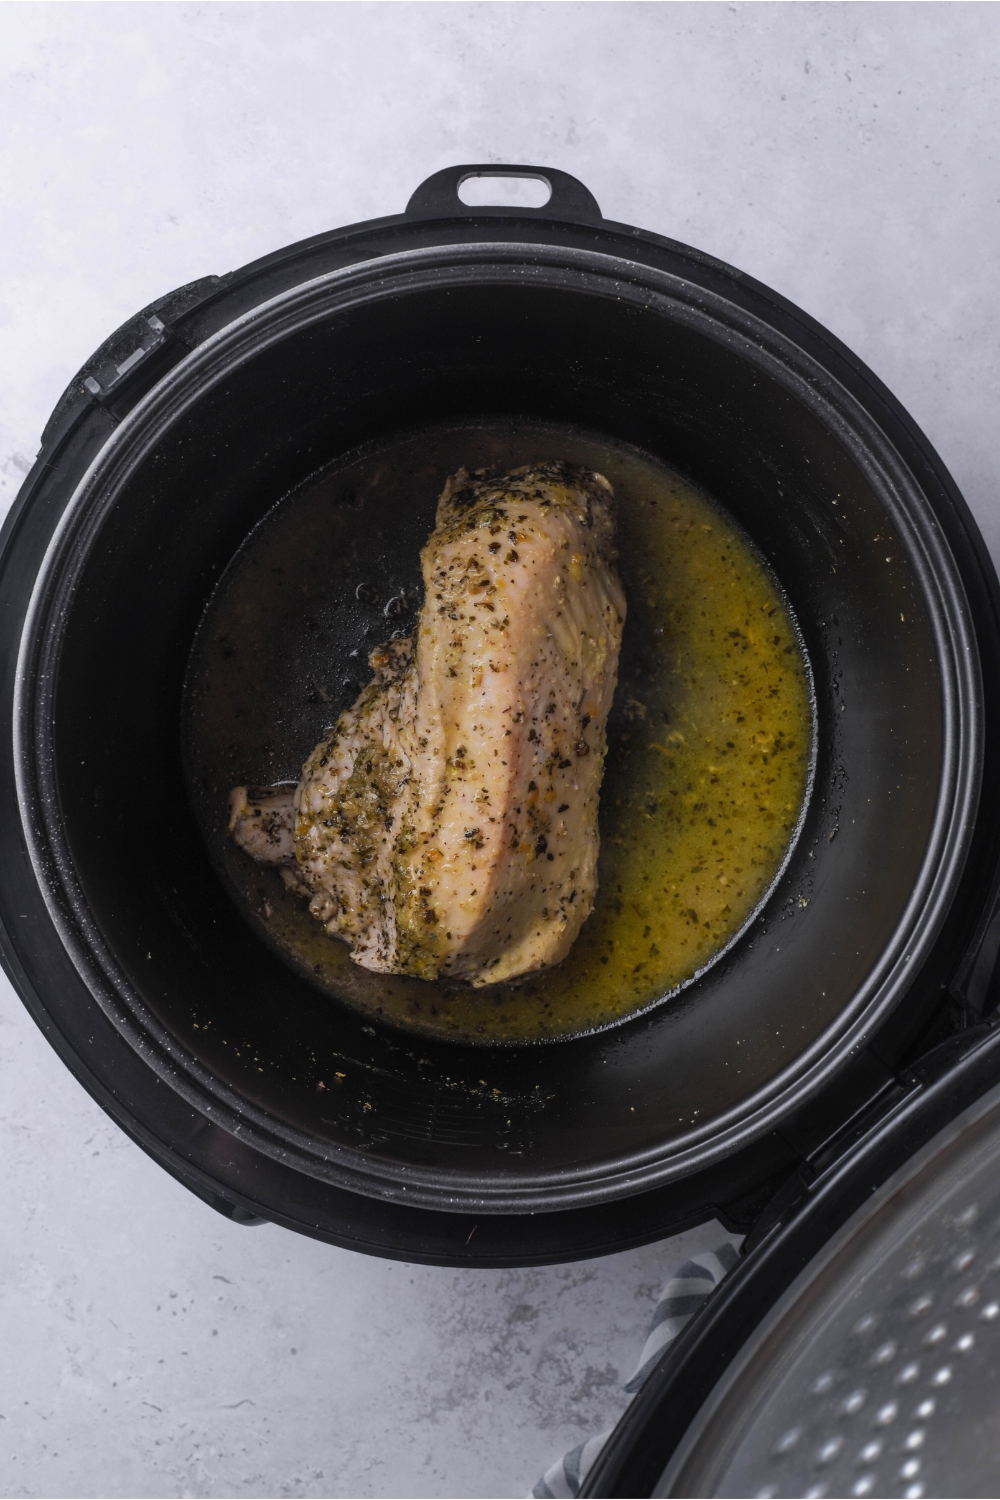 Cooked turkey tenderloin in a crock pot.